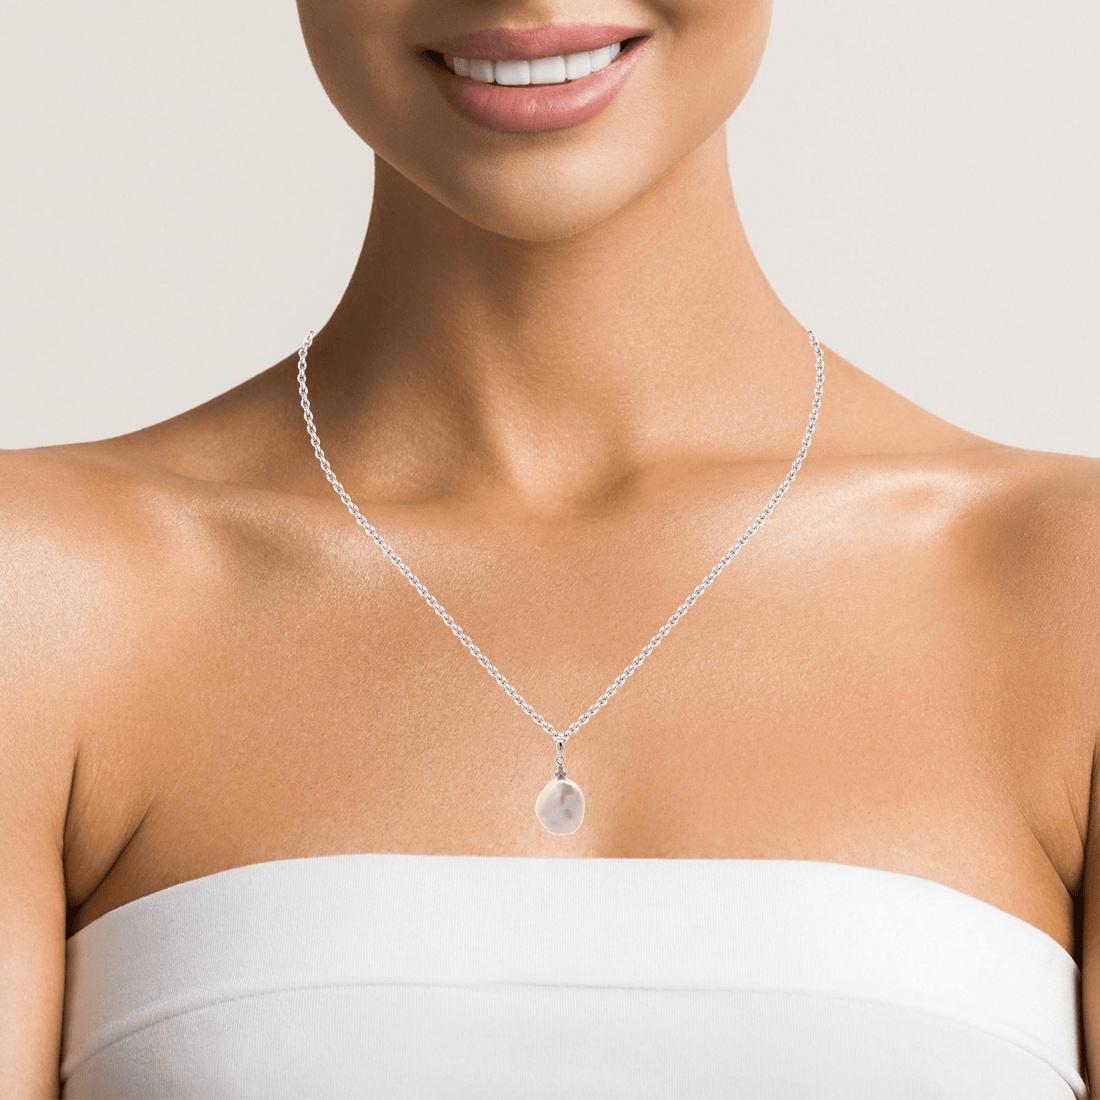 Baikalla Jewelry Gemstone Pendant Necklace Pendant Only Baikalla 14k White GoldPearl Pendant Necklace With Diamonds